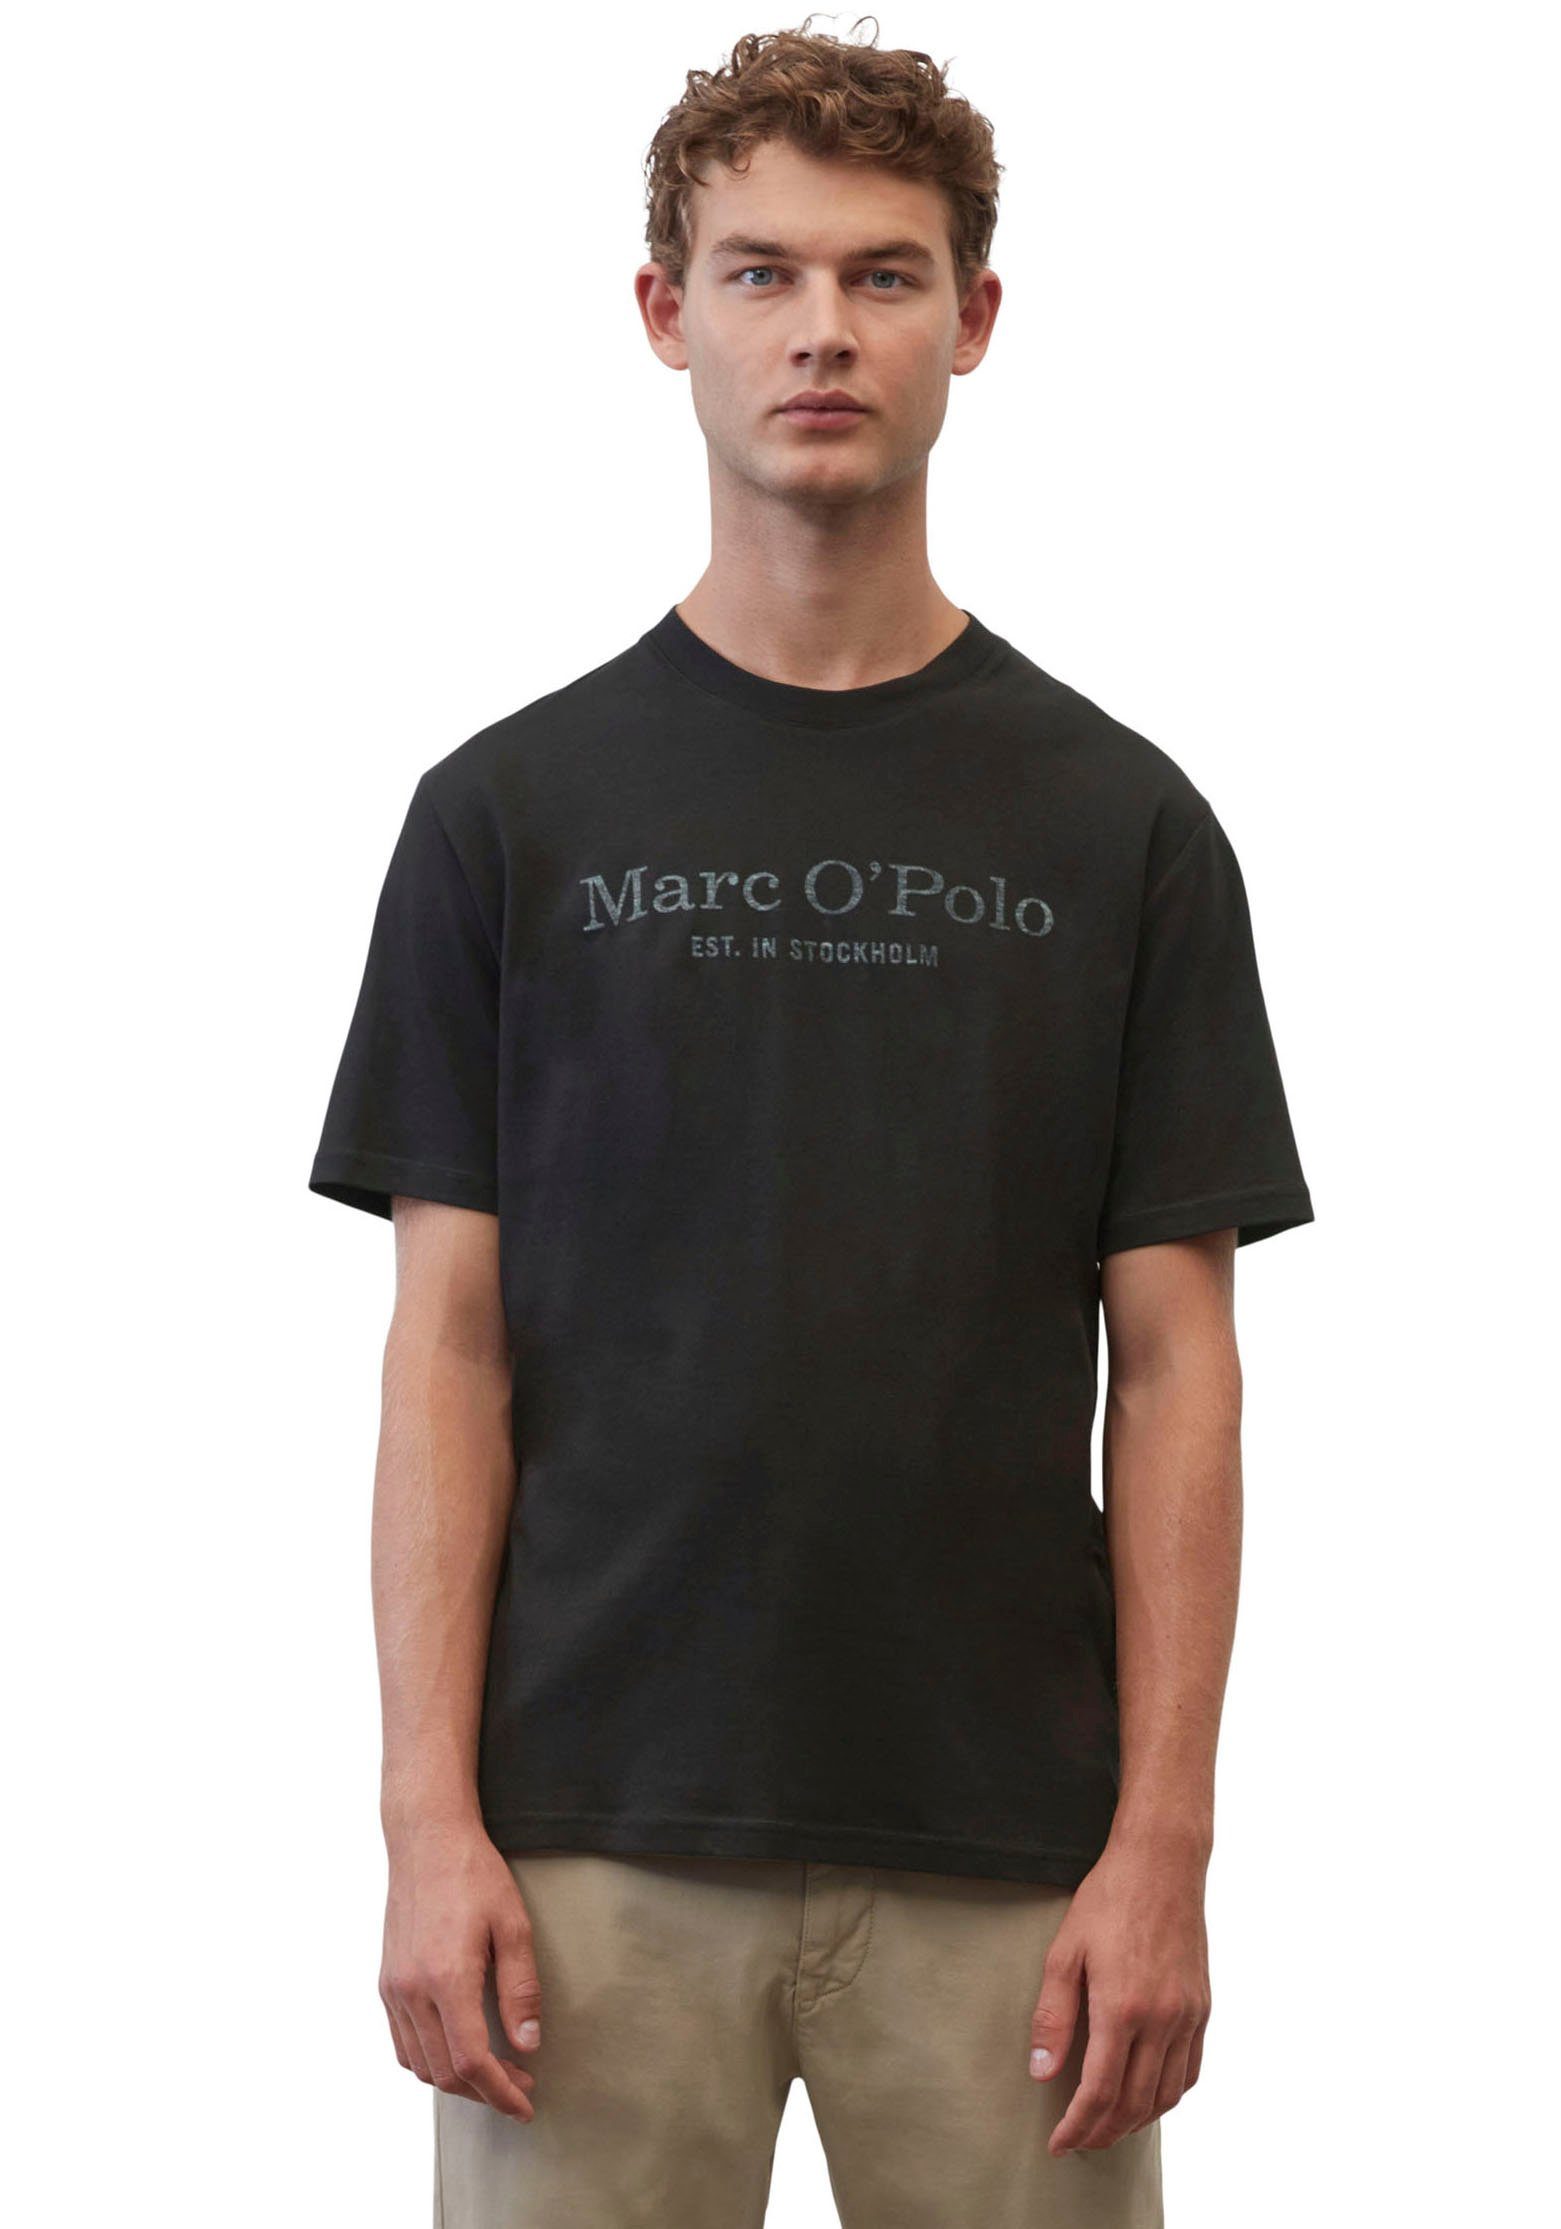 Marc O'Polo T-Shirt klassisches Logo-T-Shirt schwarz